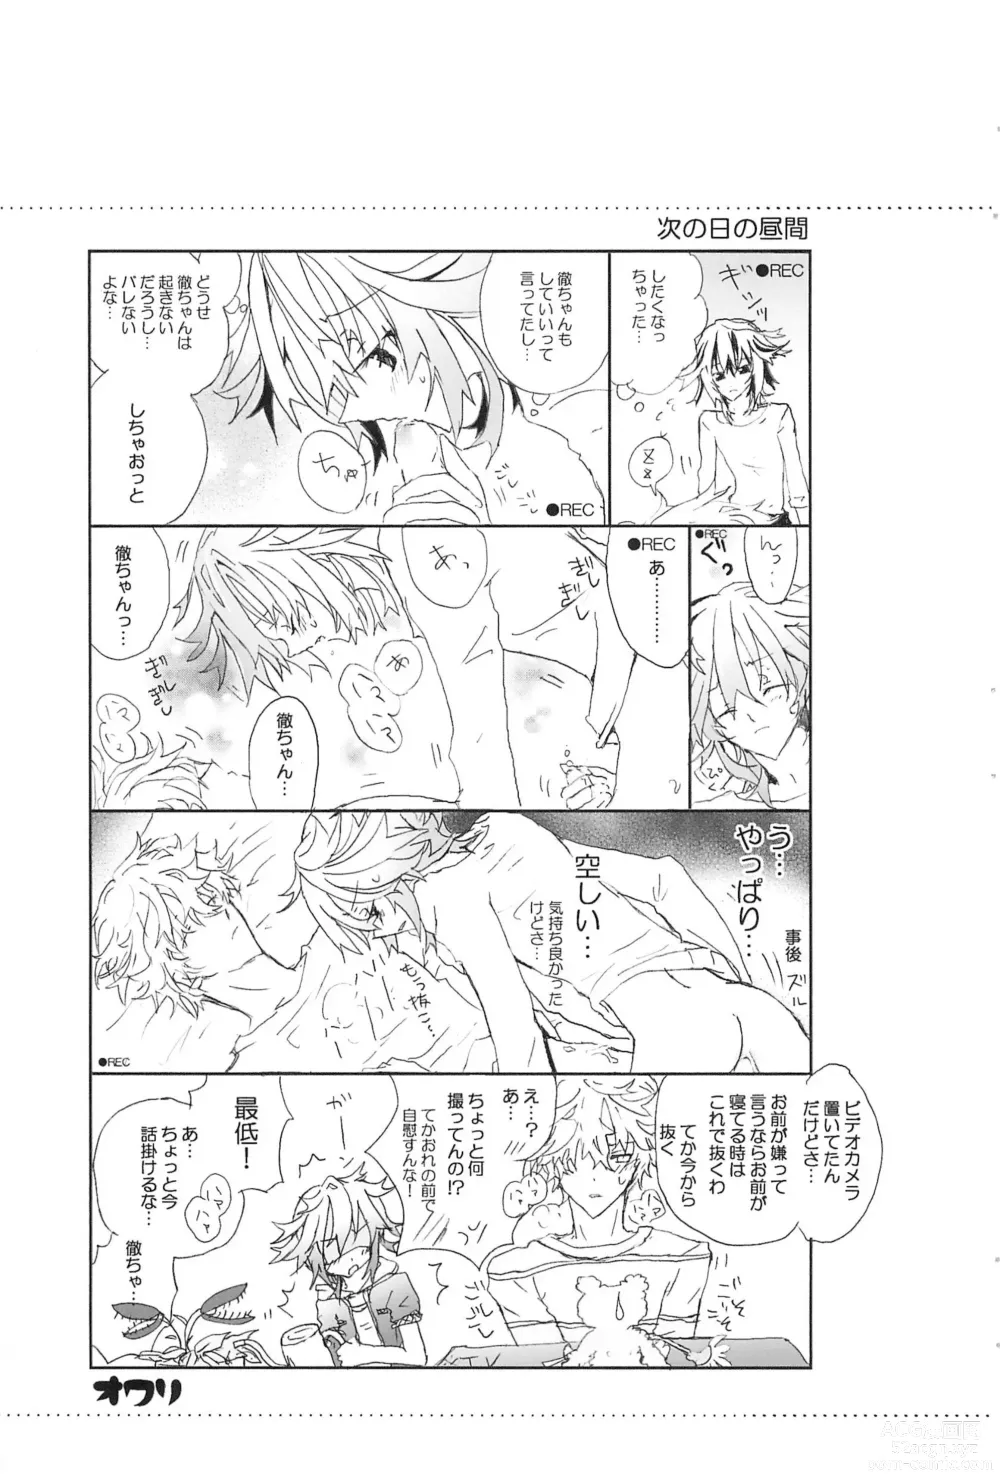 Page 25 of doujinshi Shiki-hon 6